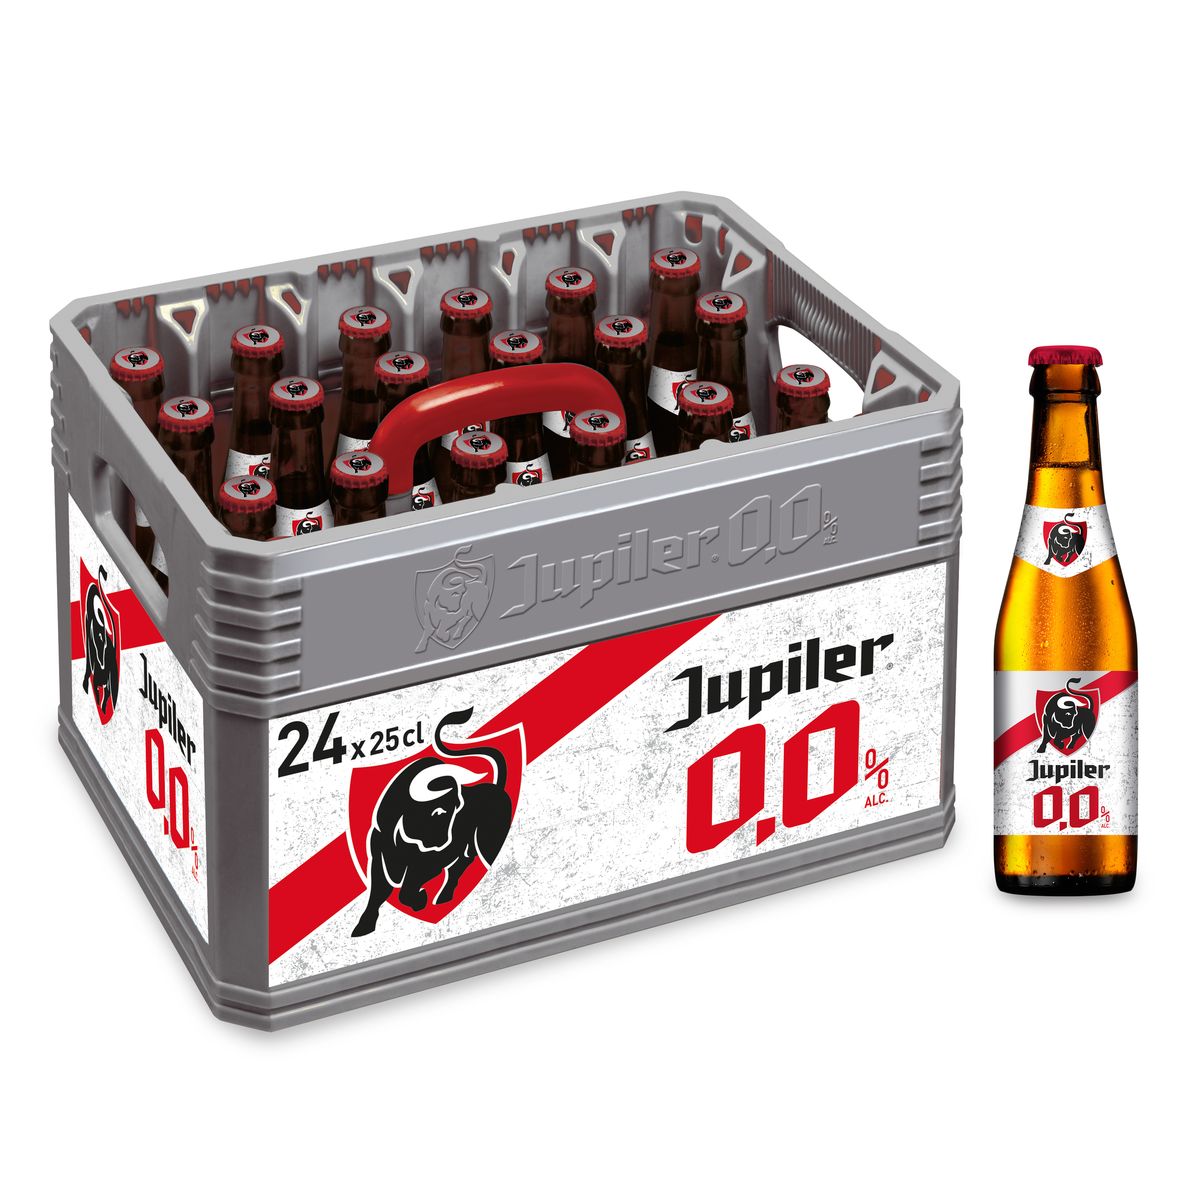 Jupiler Blond Bier Pils 0.0% Zonder Alcohol 24 x 25 cl bak